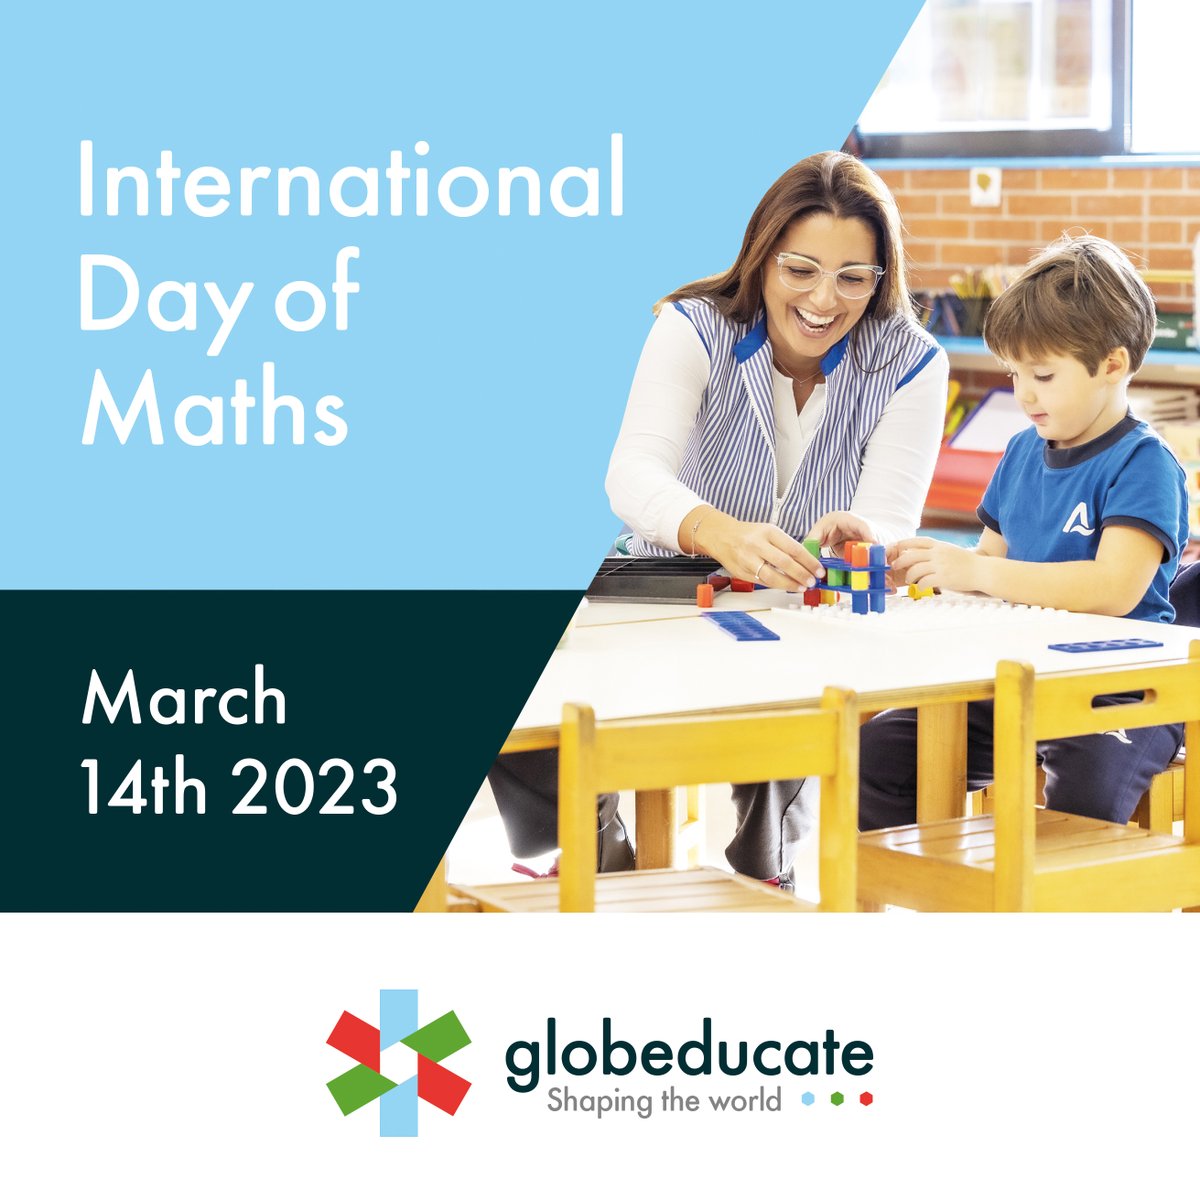 Happy International Day of Maths! ➕➖✖️➗
 
🤓👇 #icsparis #edchat #globalcitizens #internationalschools #shapingtheworld #Globeducate #MathsIsFun #InternationalDayOfMathematics #MathsPuzzles #MathsActivities #MathsForAllAges